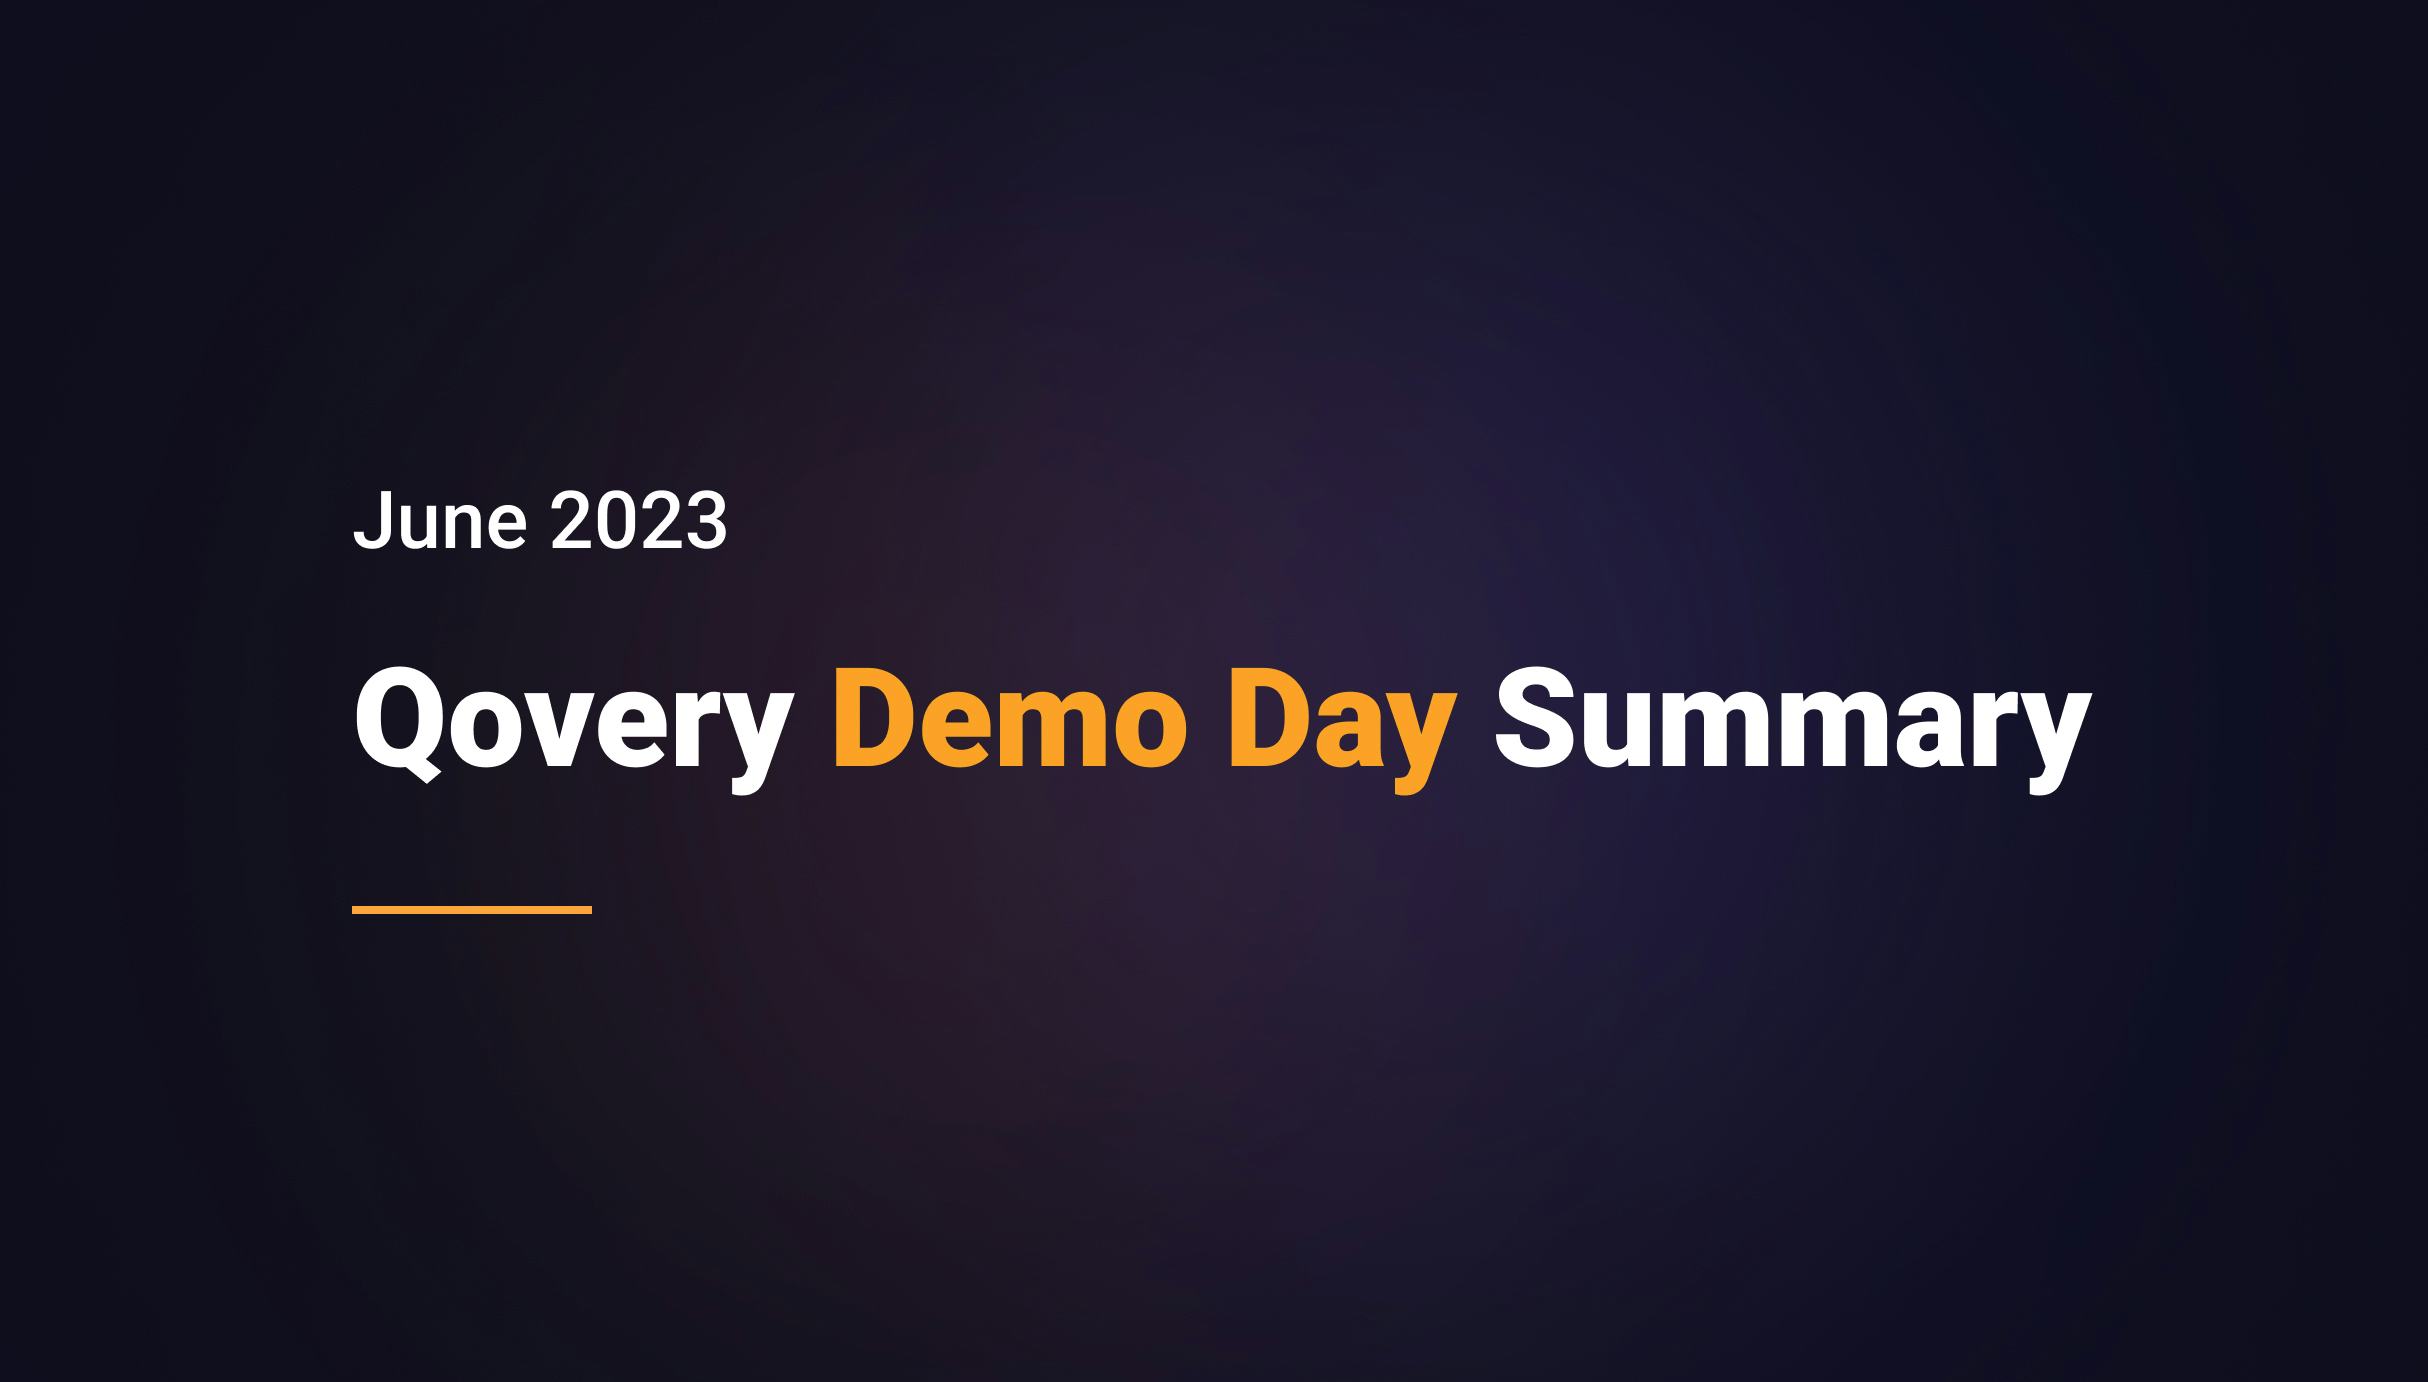 Qovery Demo Day Summary - June 2023 - Qovery